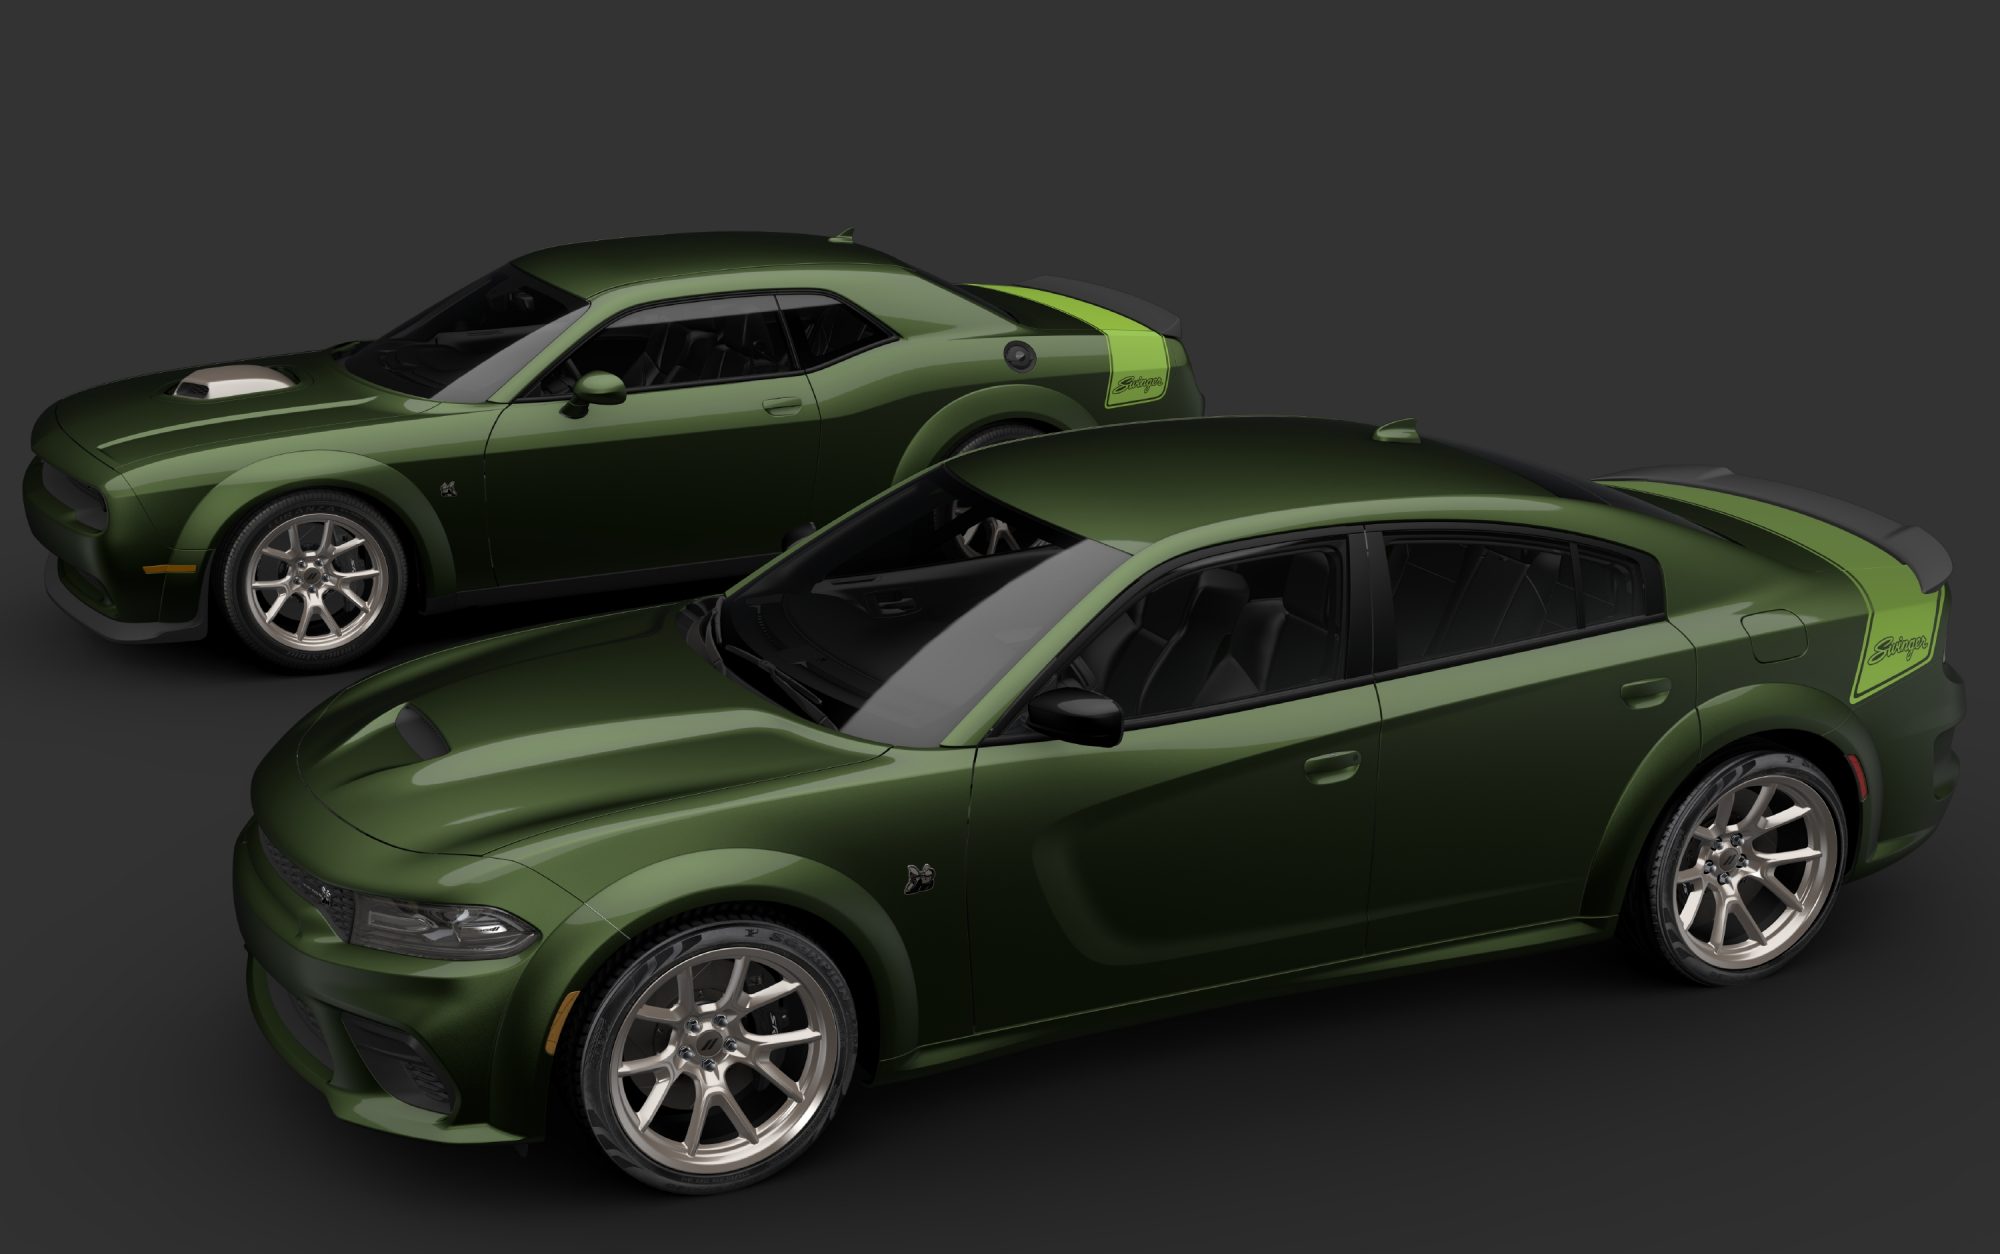  New 2023 Dodge Challenger Models Release Date